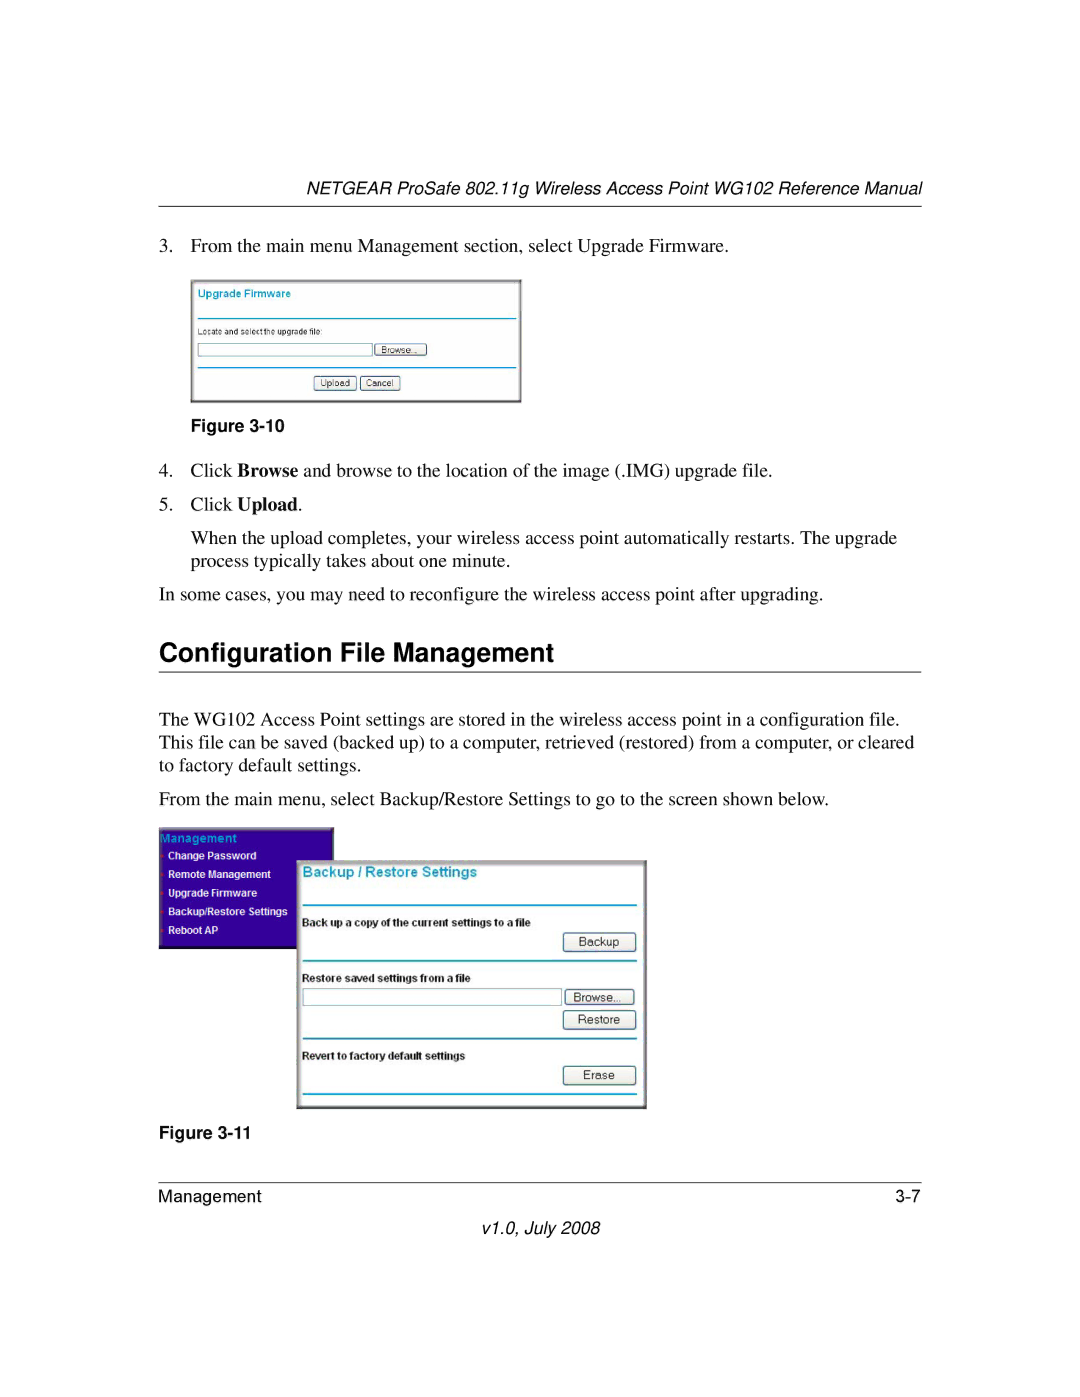 NETGEAR WG102NA manual Configuration File Management 